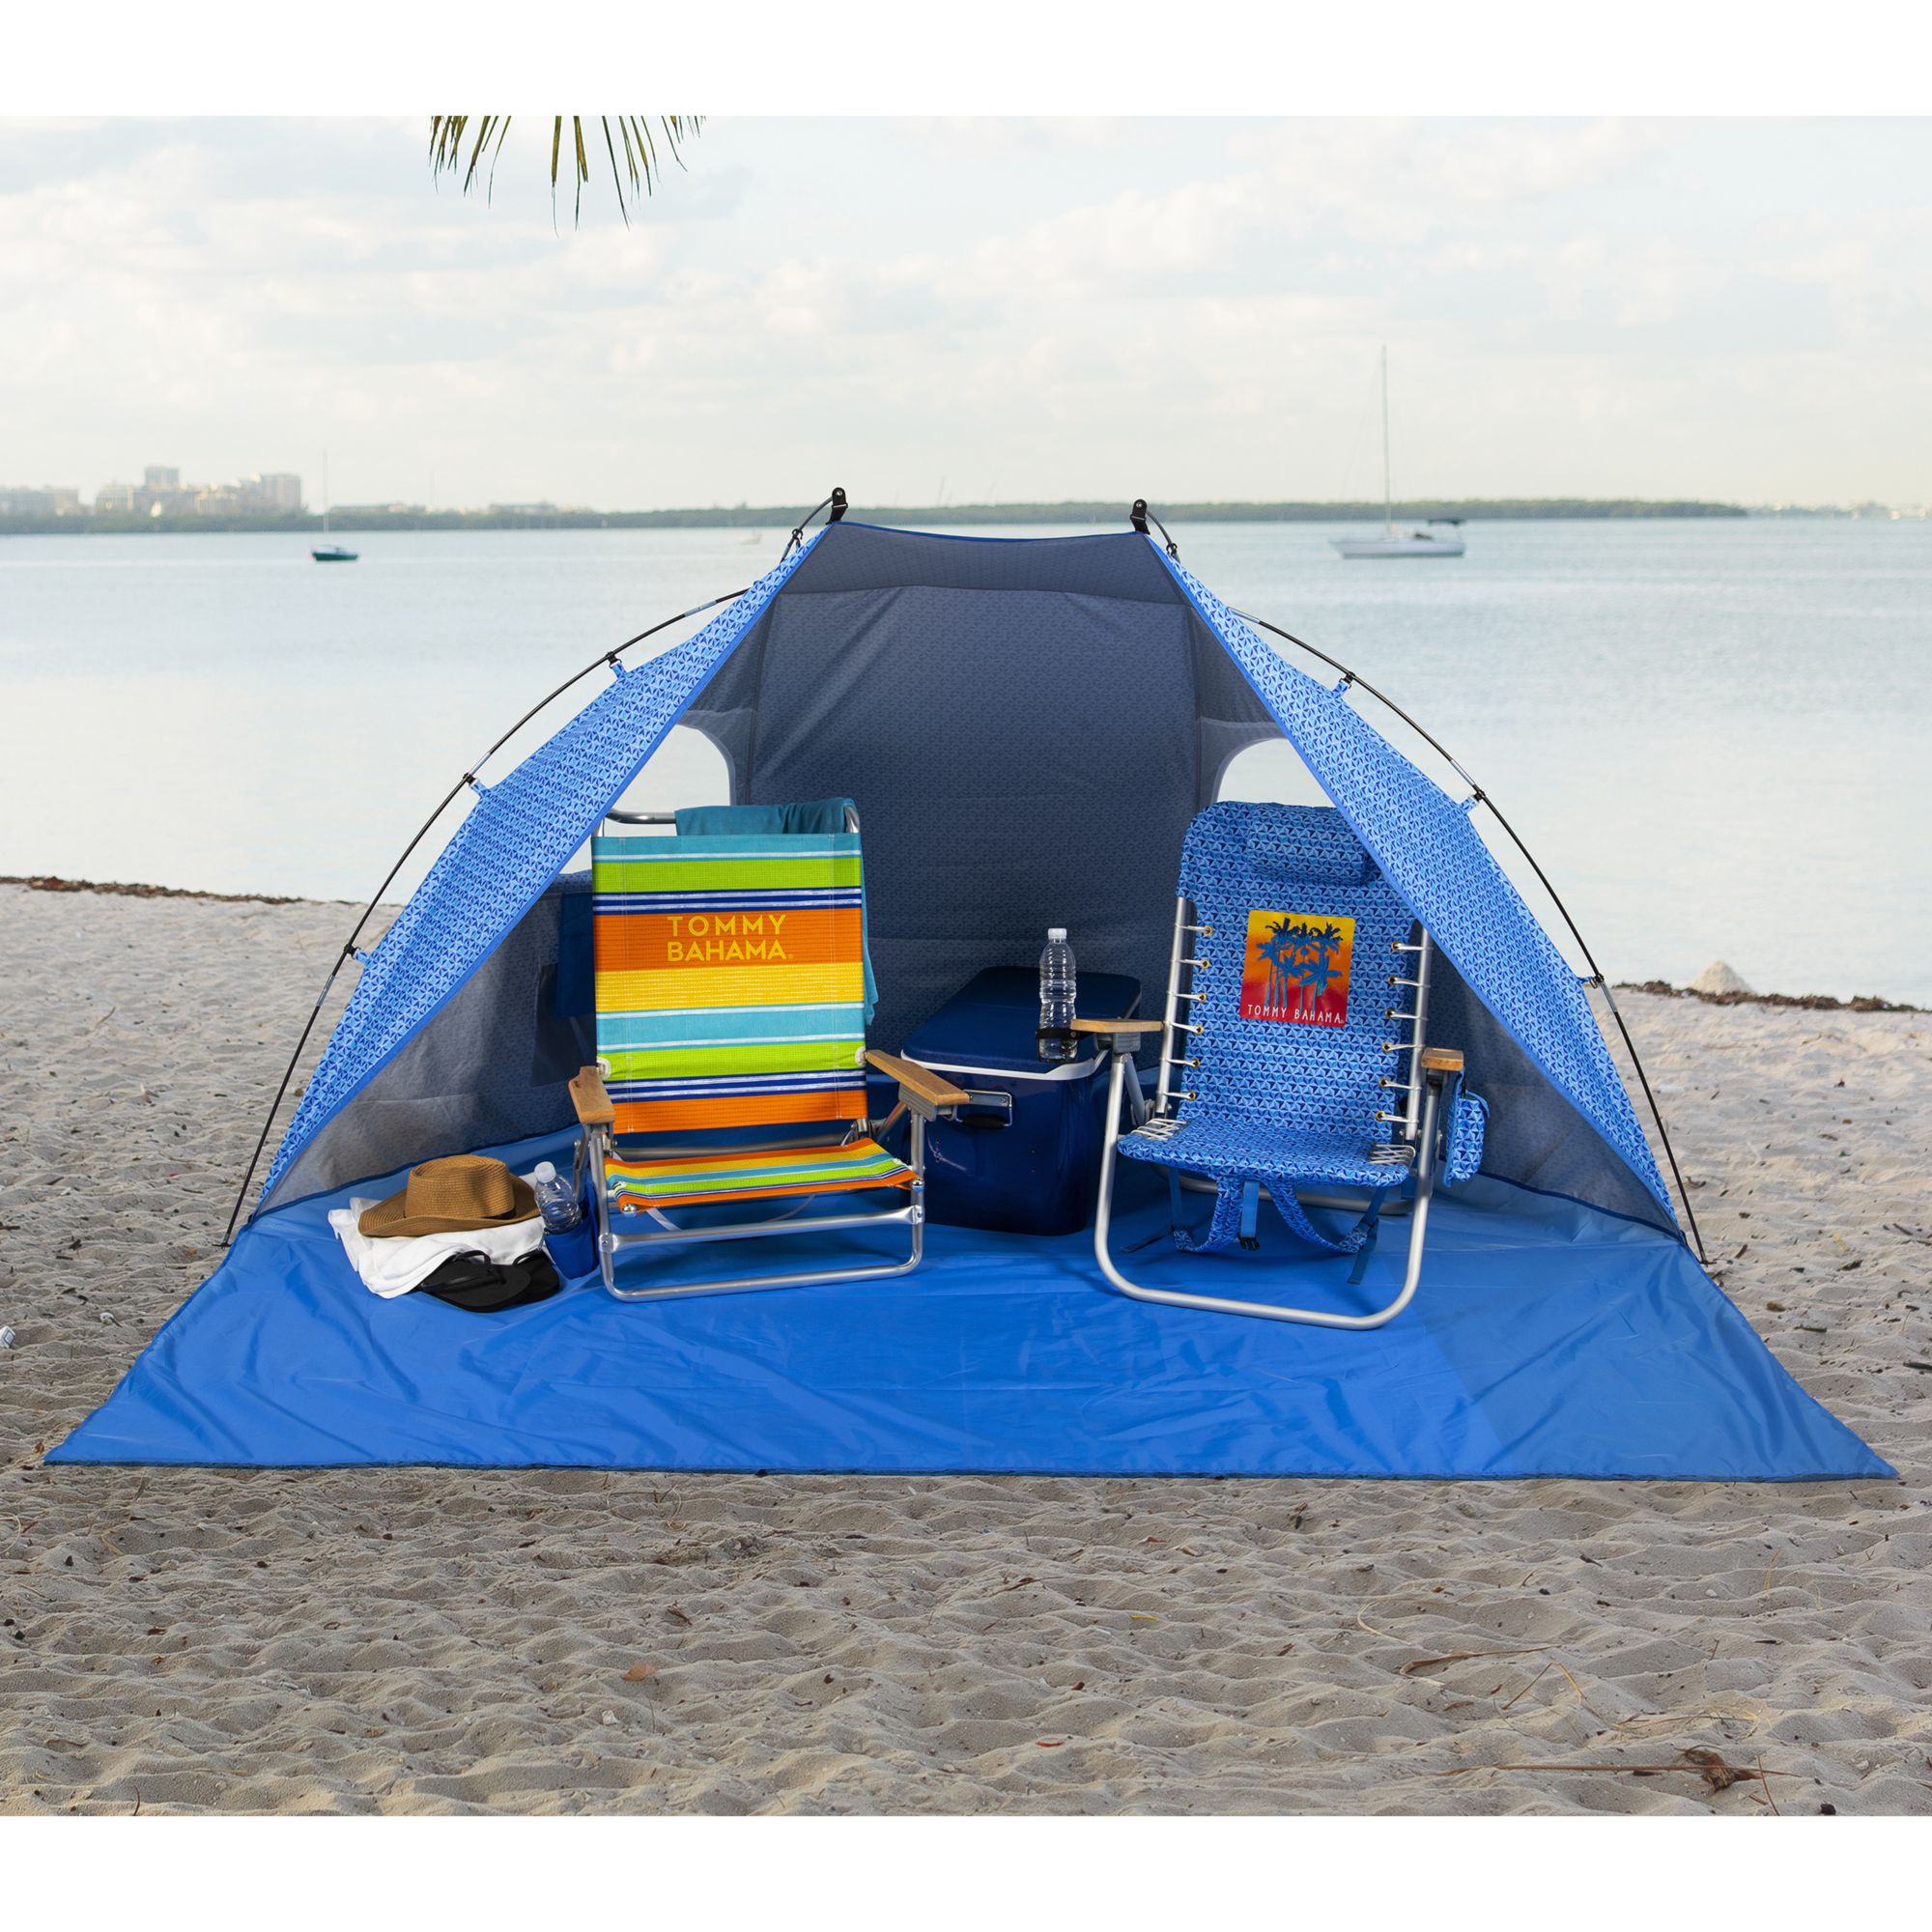 Tommy Bahama Portable Beach Shelter